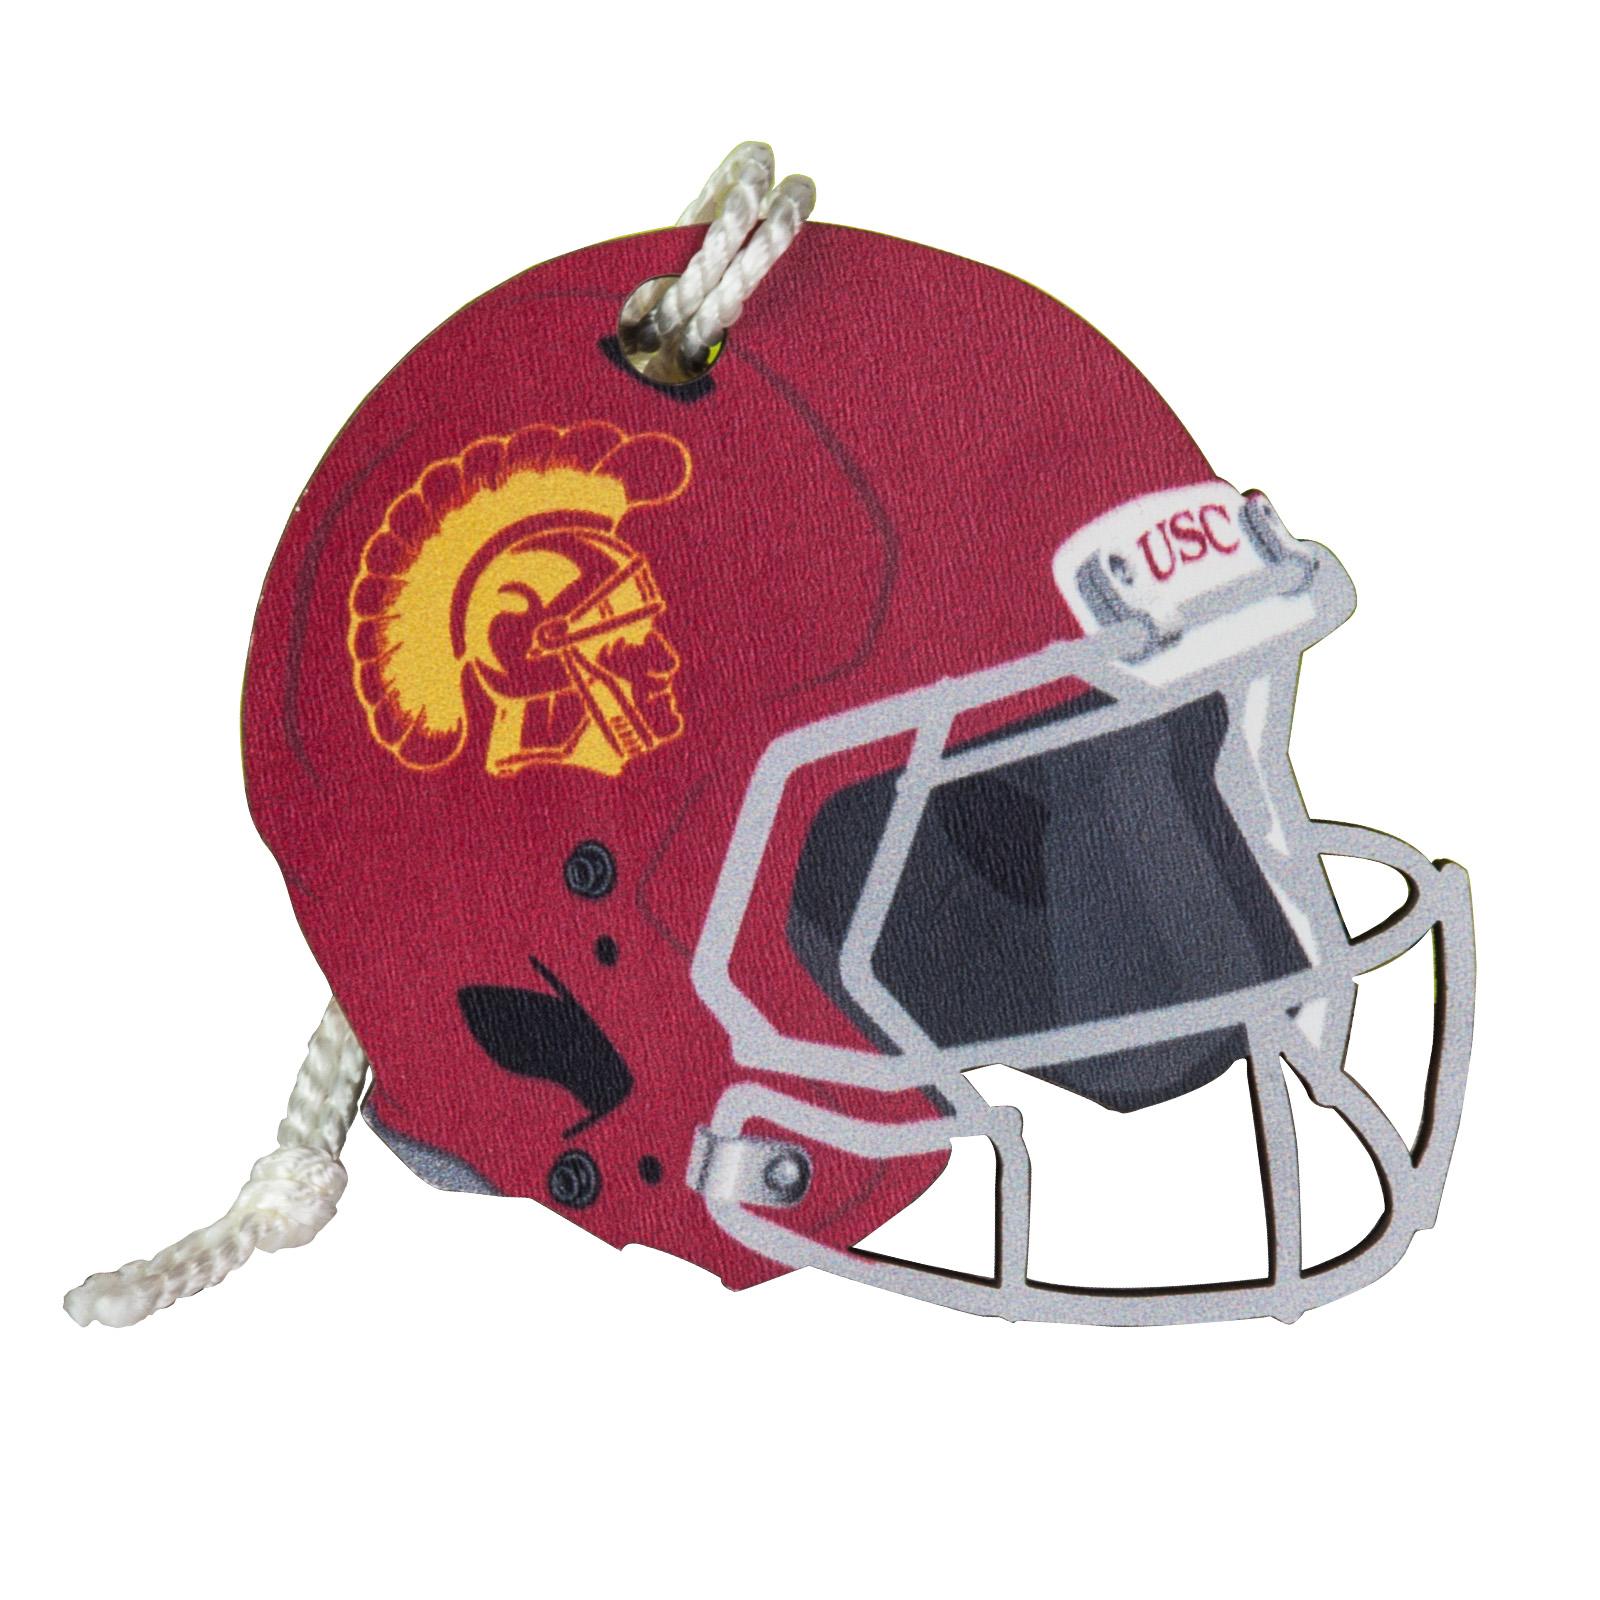 USC Wooden Football Helmet Ornament image01